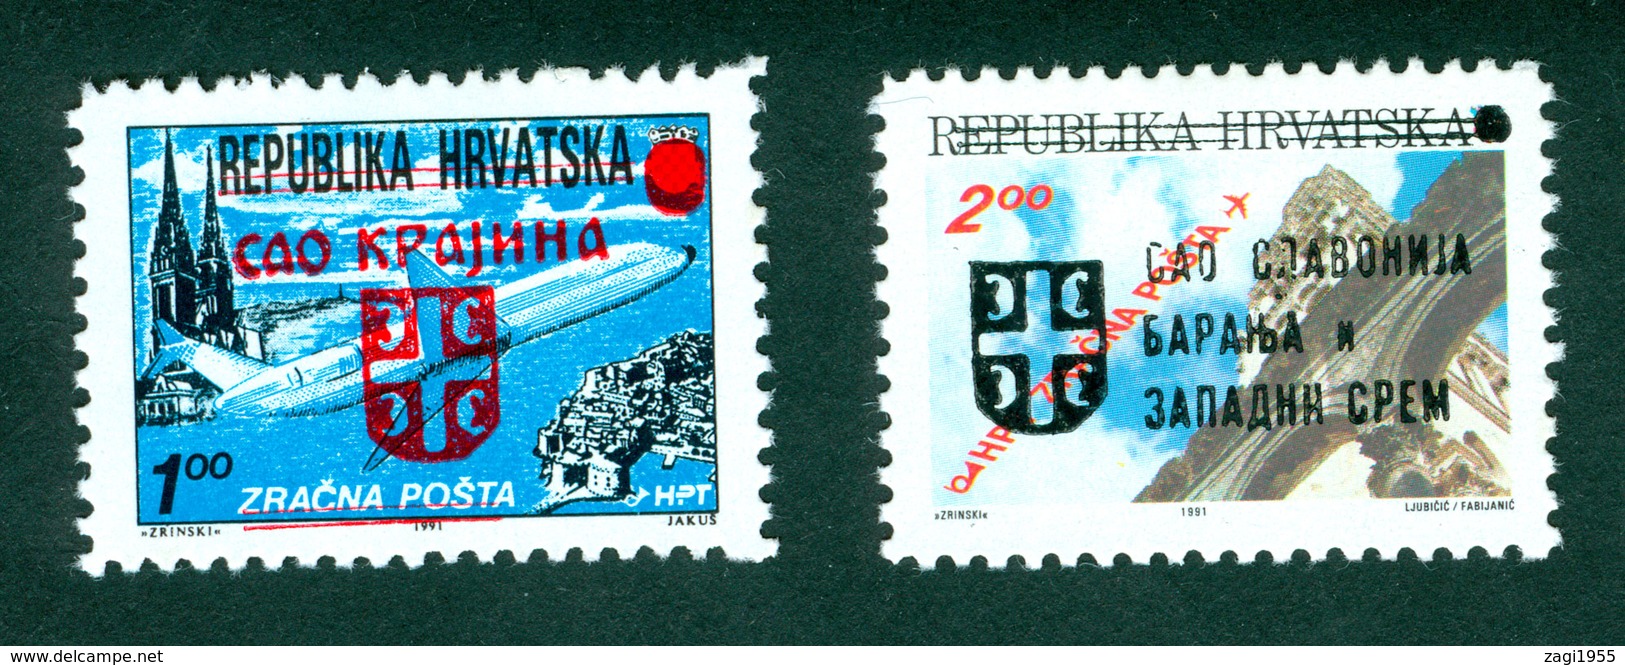 Croatia 1993 Occupation RSK Serbian Krajina Private Overprint Offered As The 1st RSK Stamp - Croacia